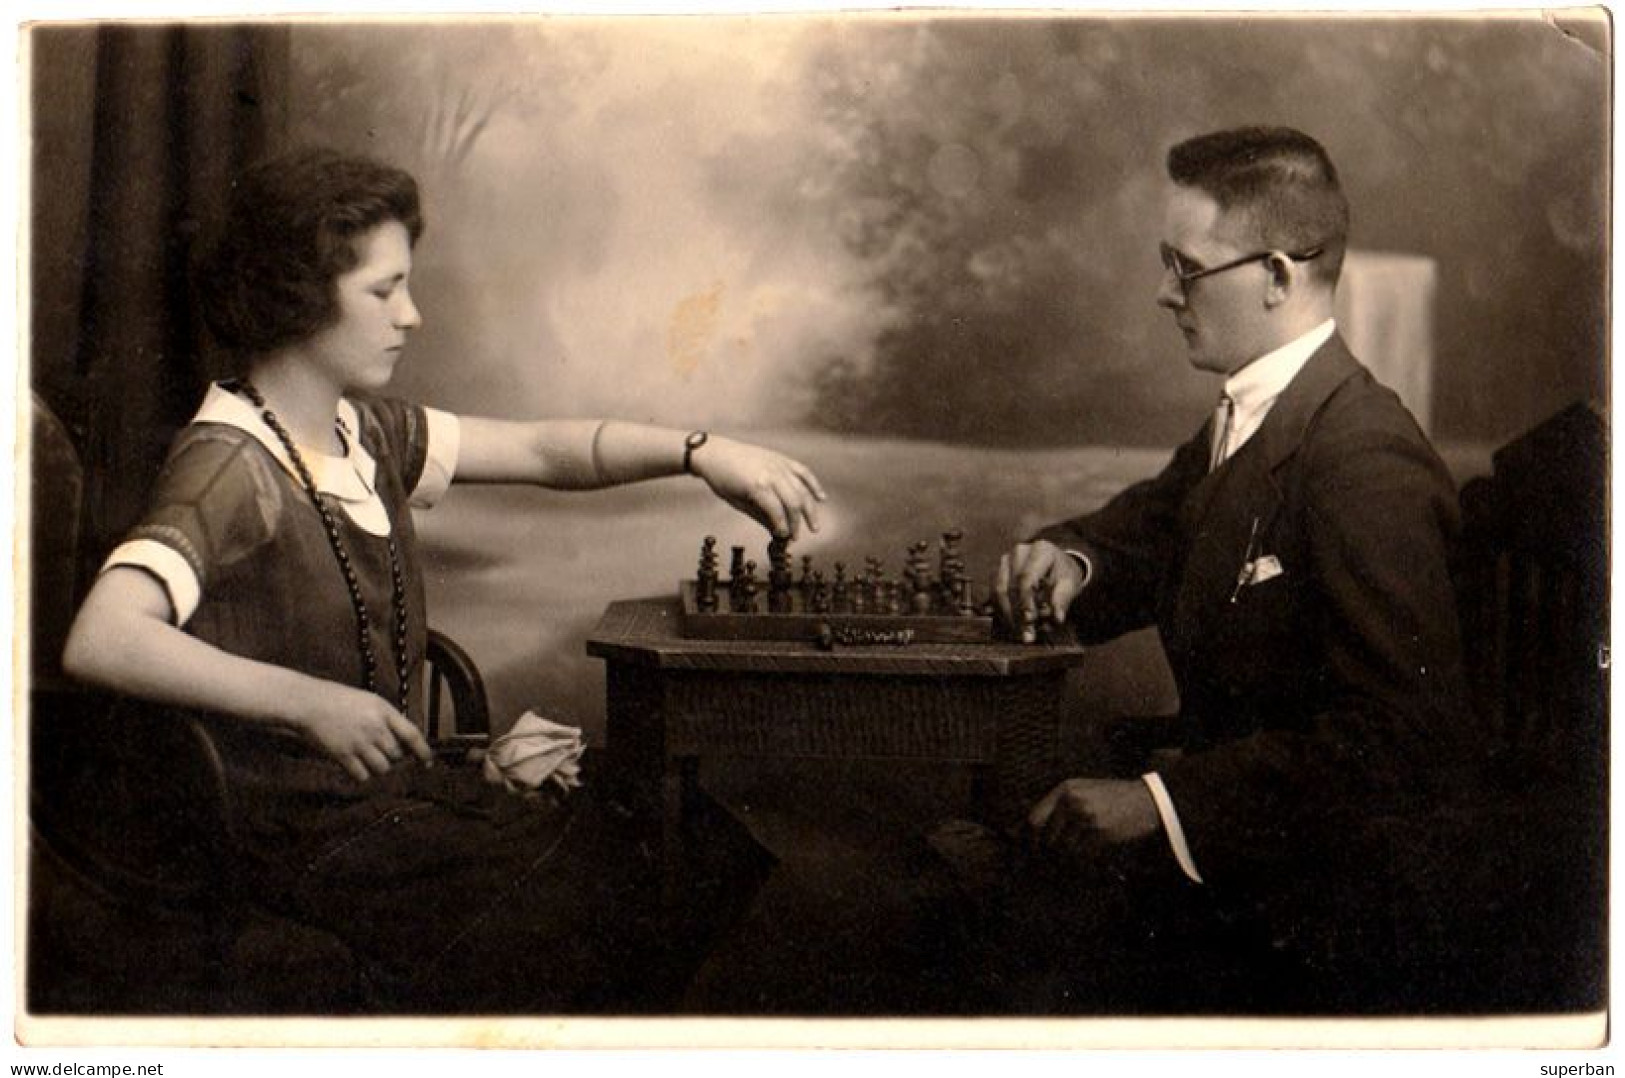 ECHECS / CHESS : ROUMANIE / ROMANIA : CHESS GAME / PARTIE D'ECHECS - CARTE VRAIE PHOTO / REAL PHOTO ~ 1935 - '40 (an322) - Ajedrez